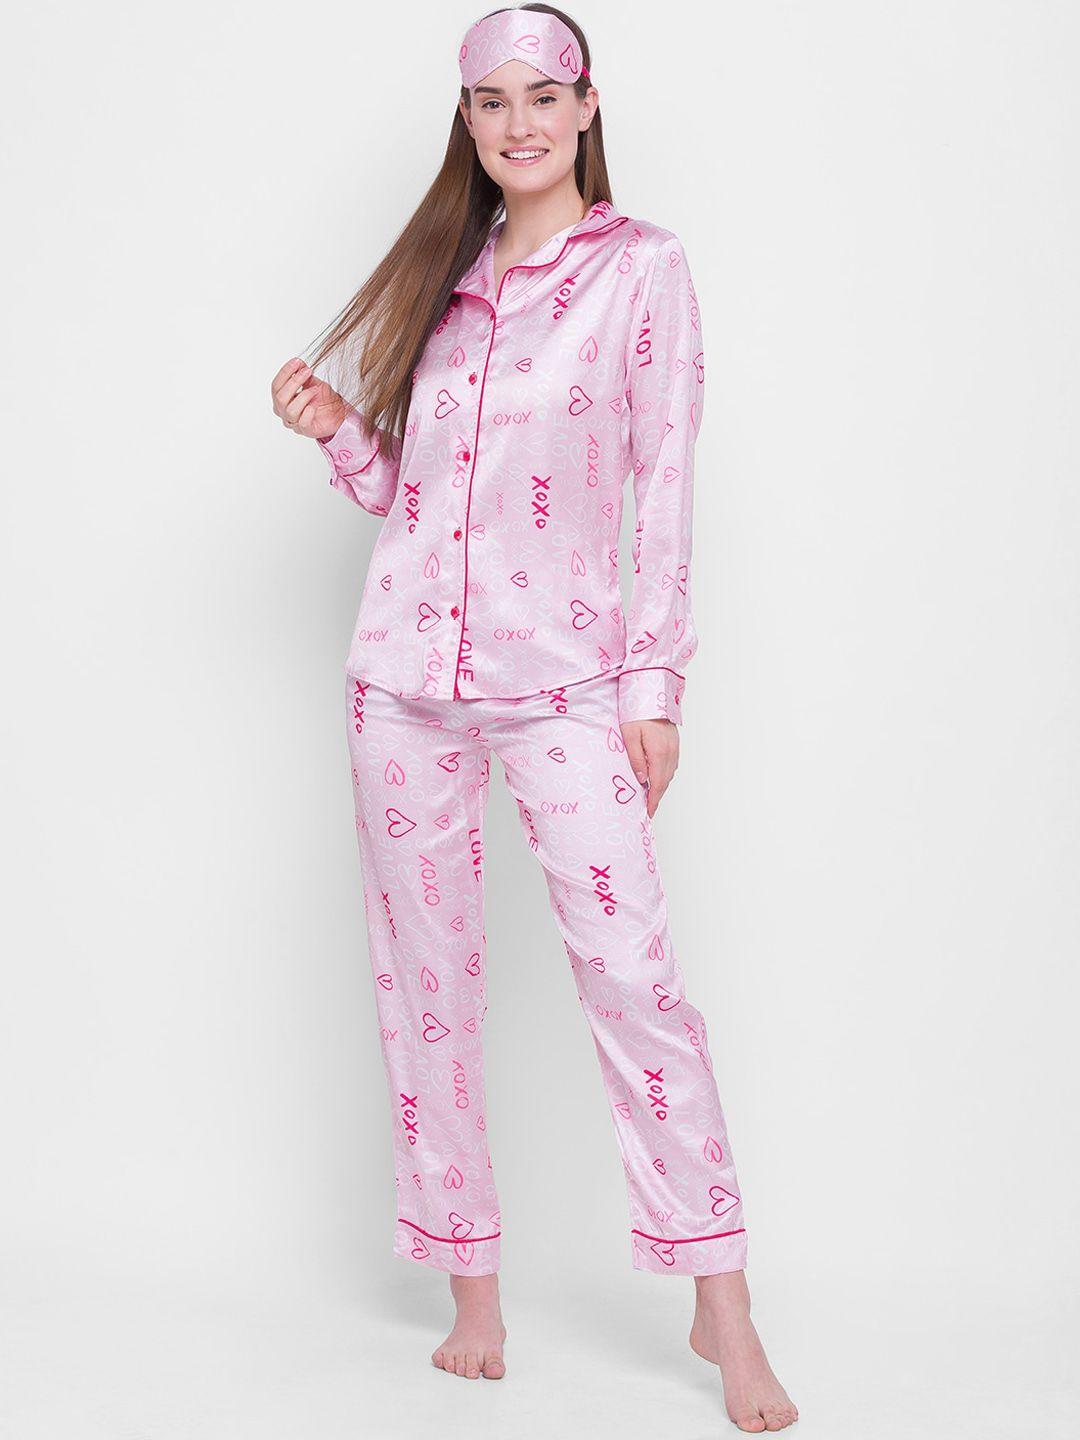 candyskin women pink & fuchsia printed night suit